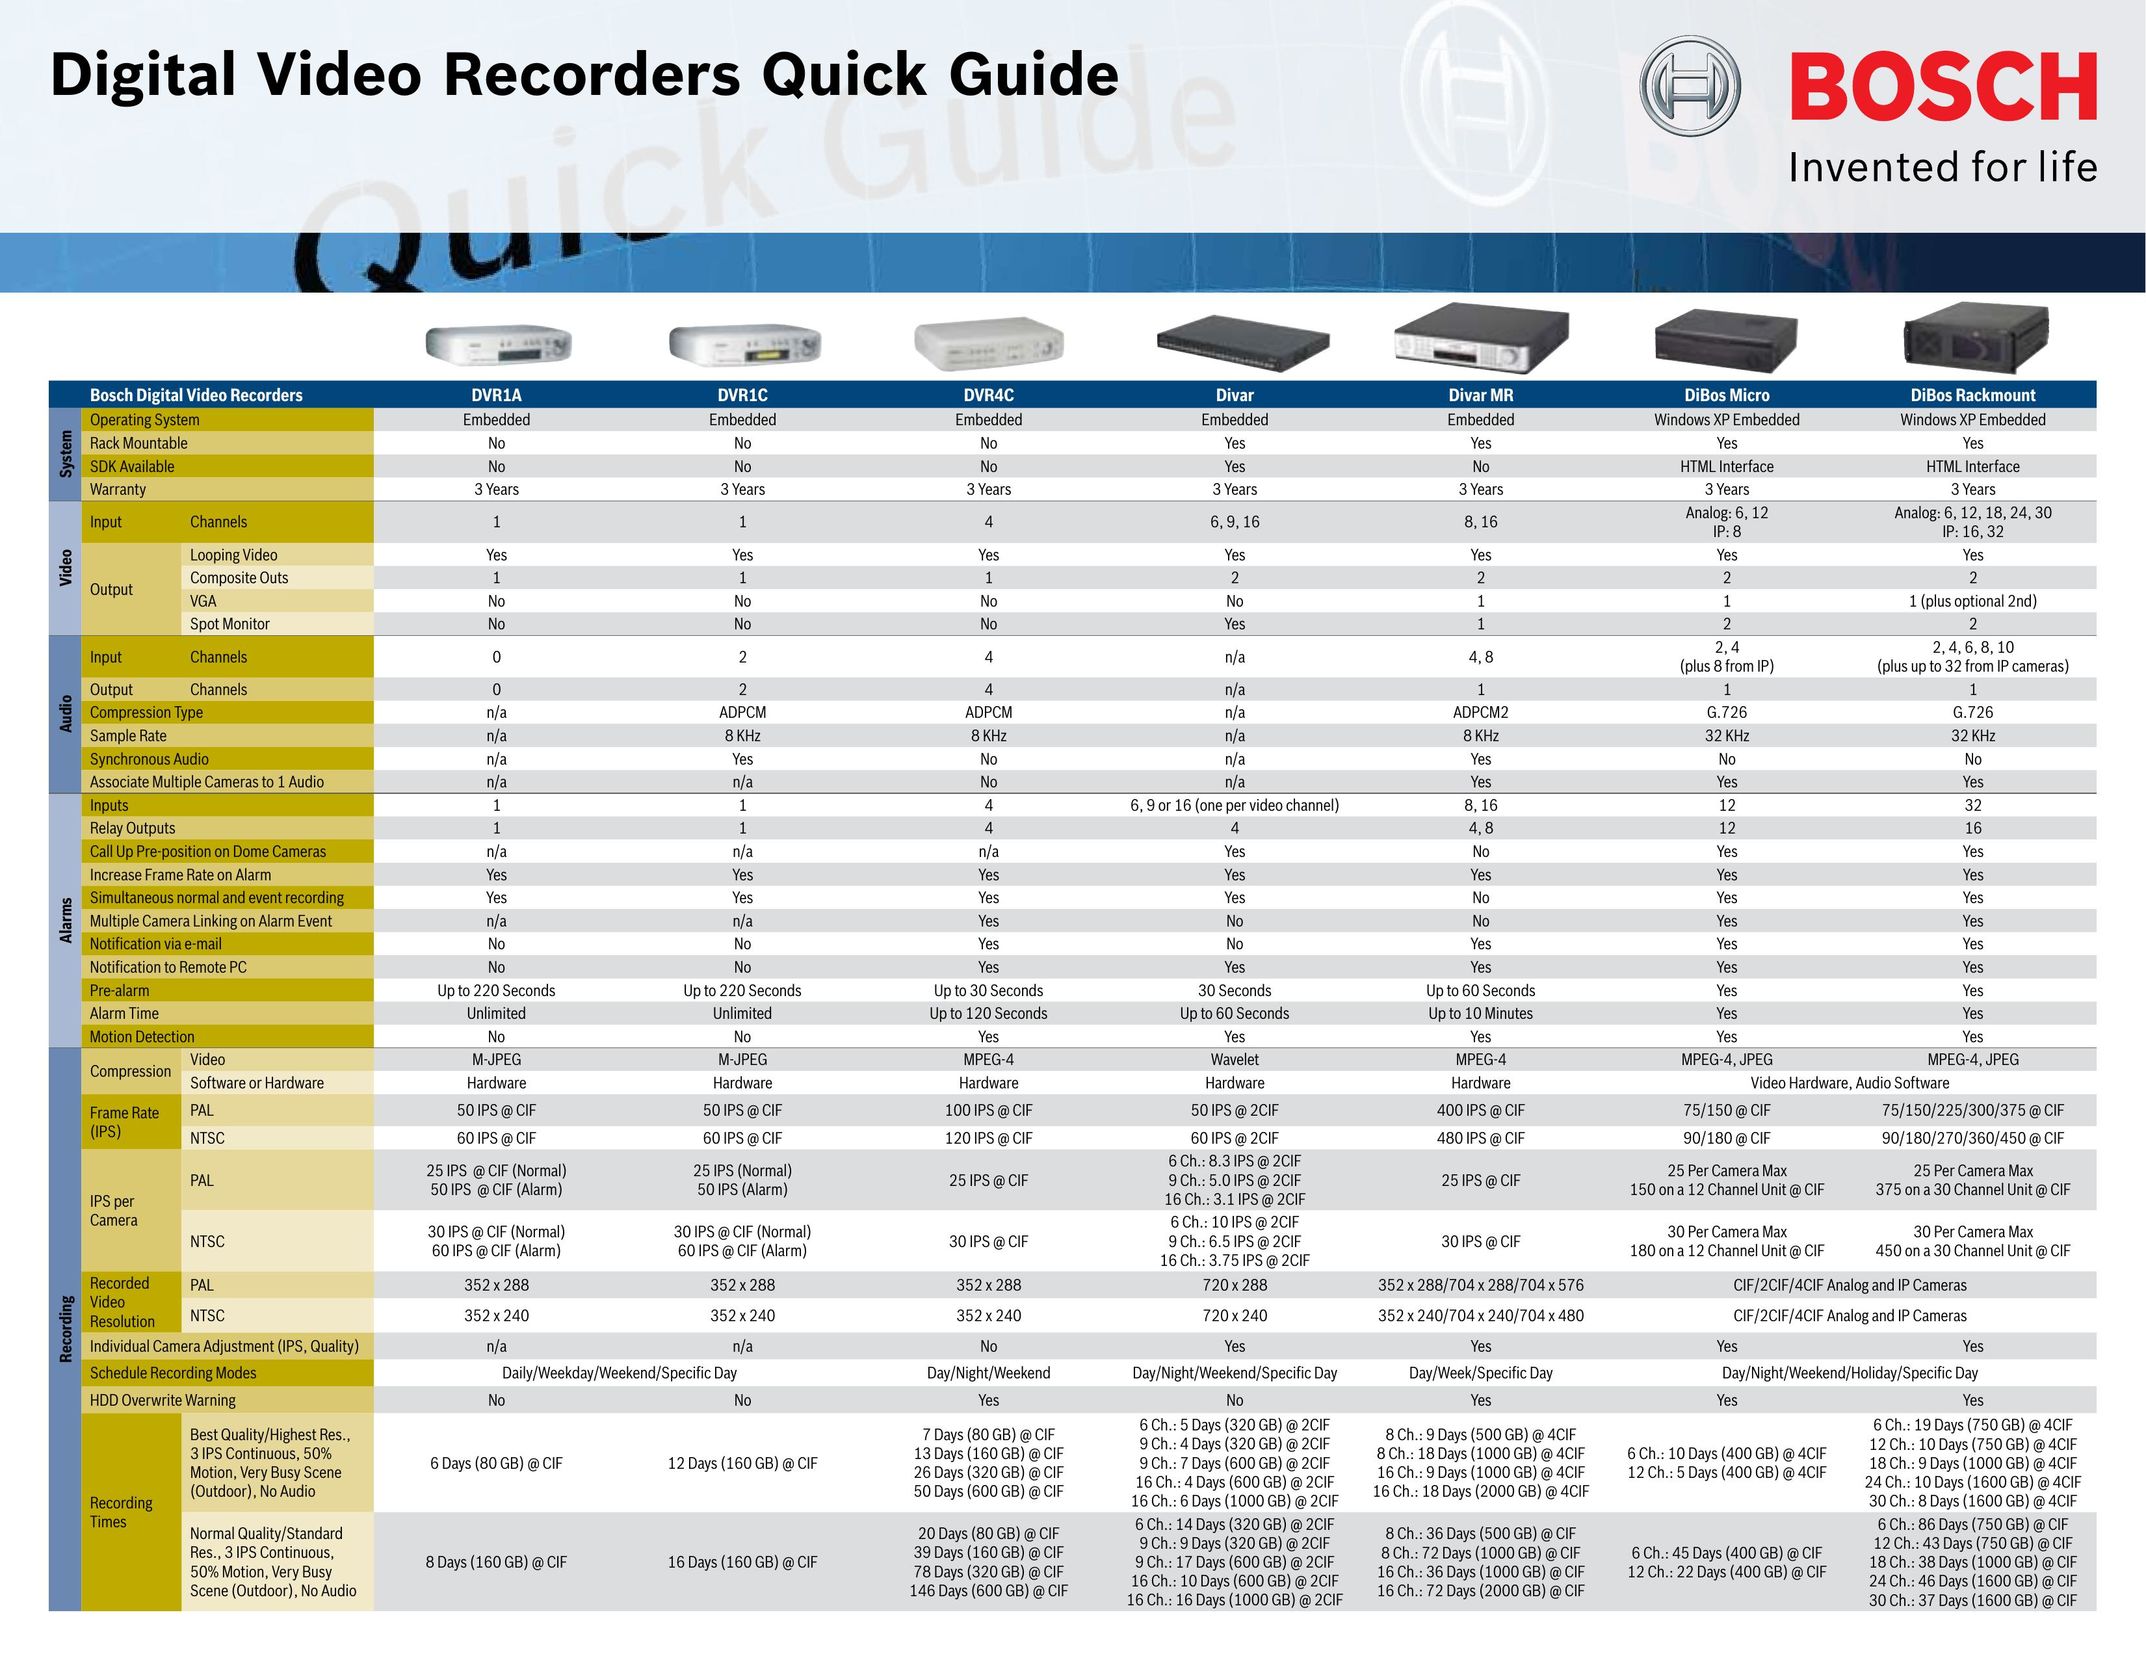 Bosch Appliances DIVAR DVR User Manual